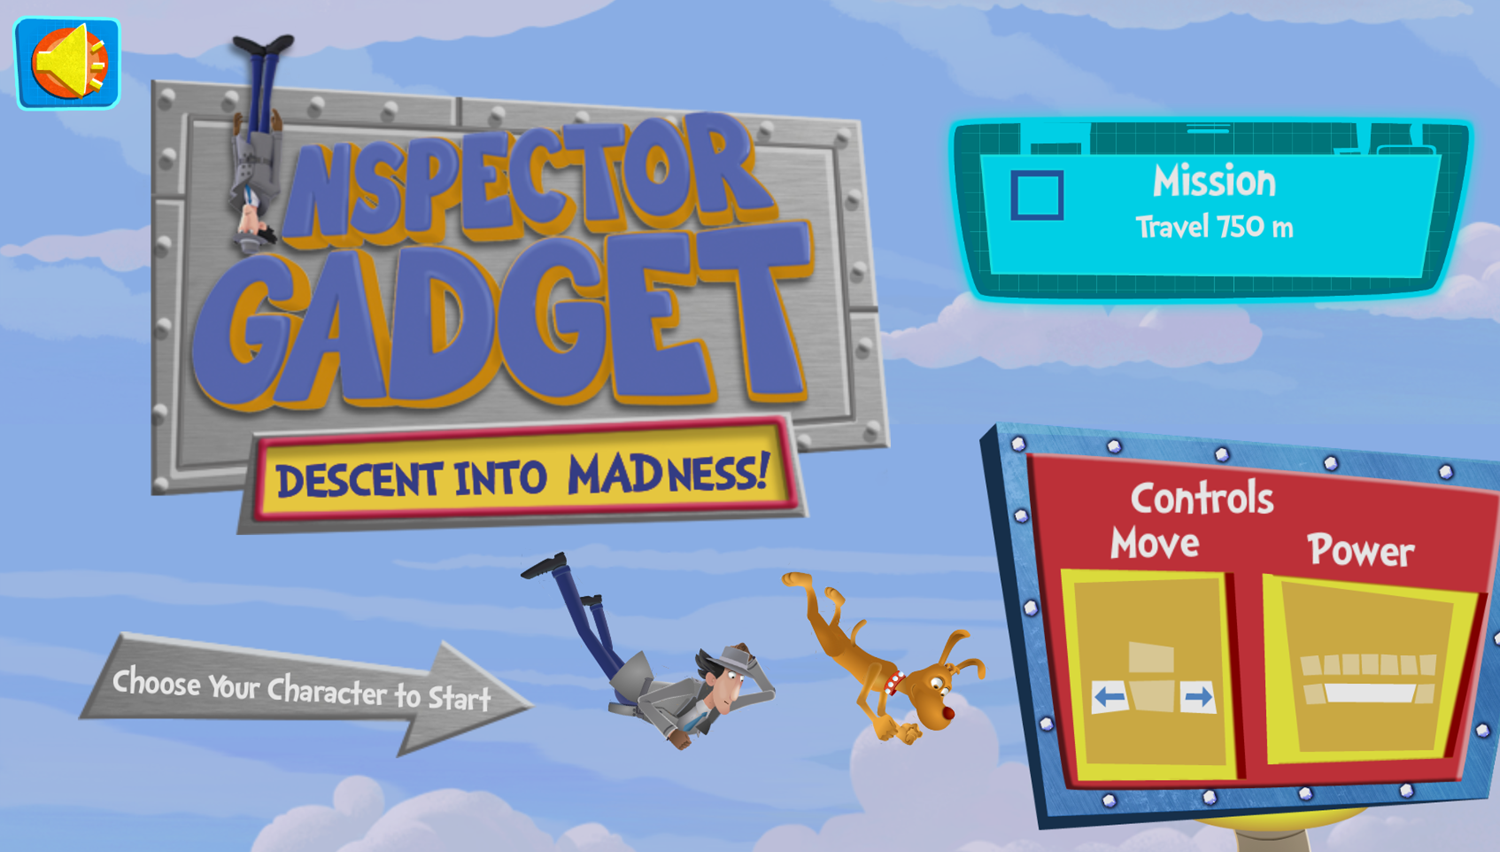 Inspector Gadget Descent Into Madness Game Welcome Screen Screenshot.